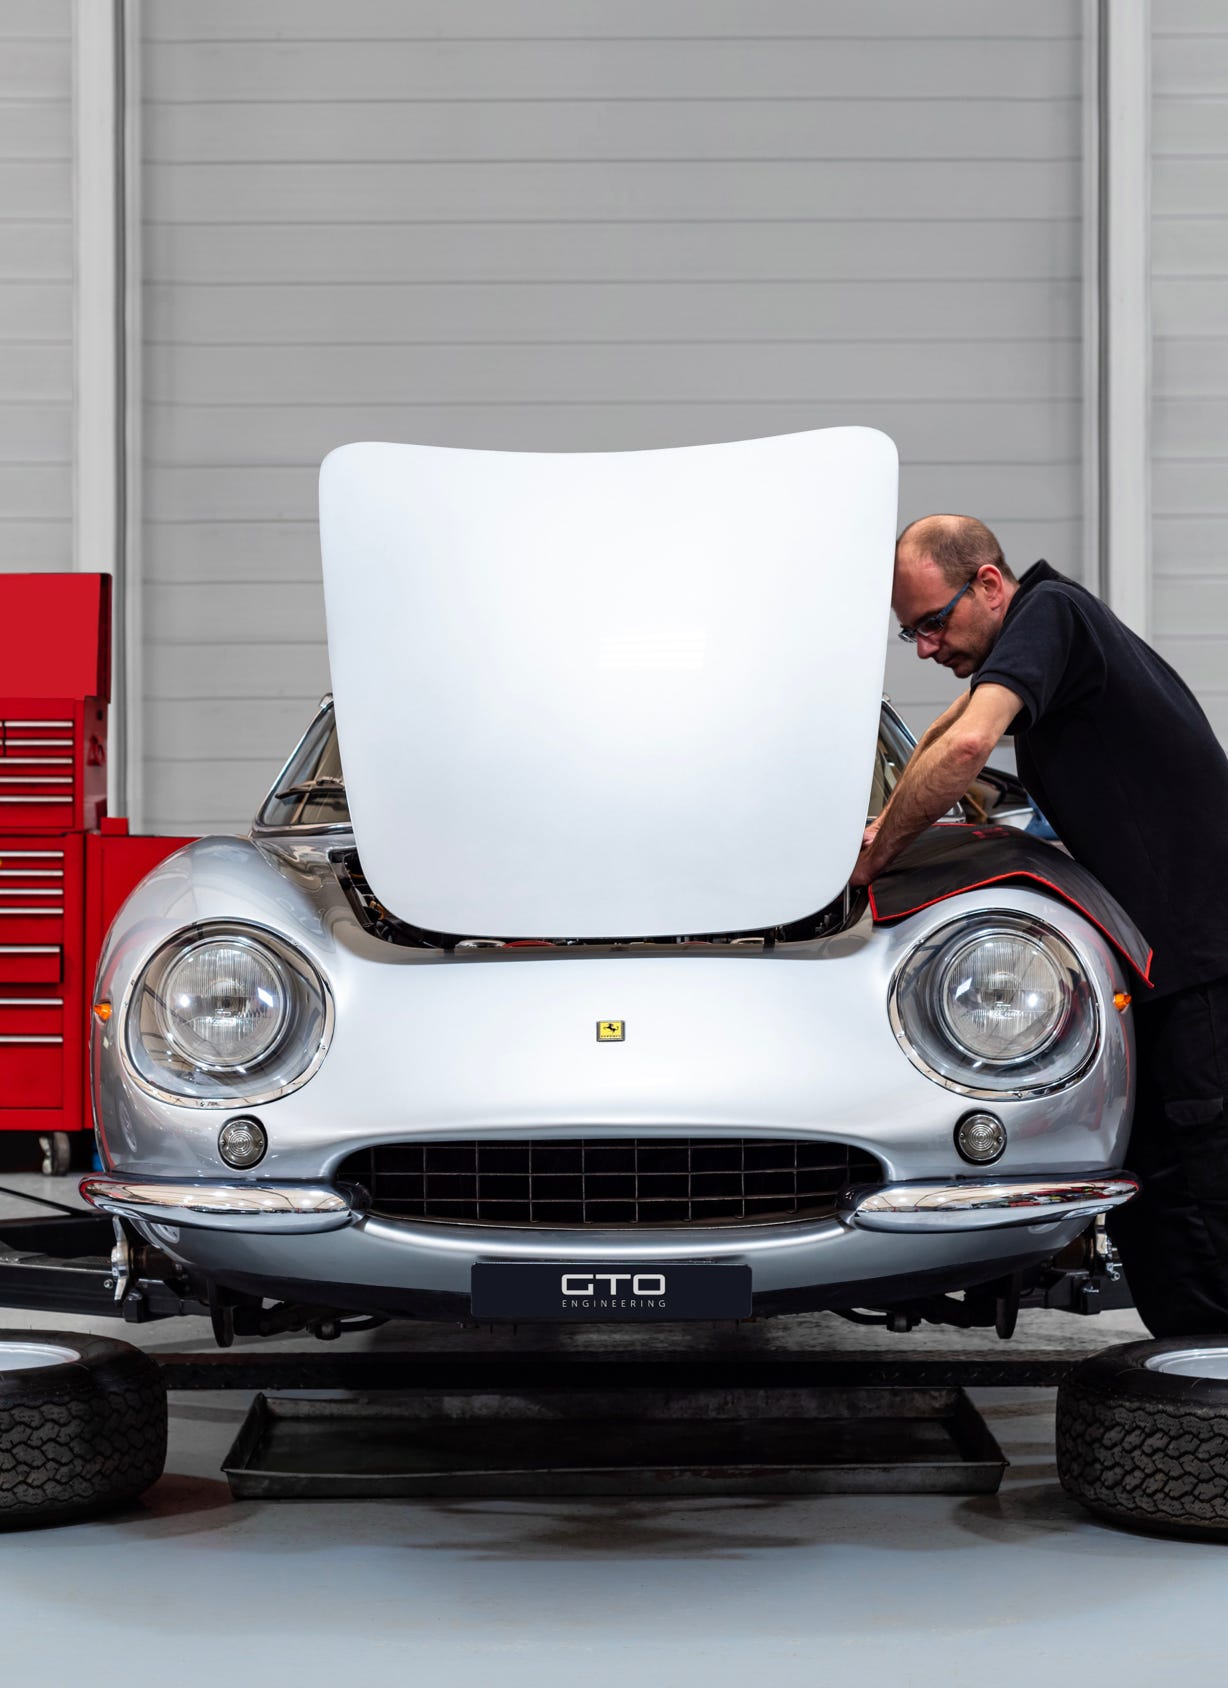 GTO mechanic working on a classic Ferrari